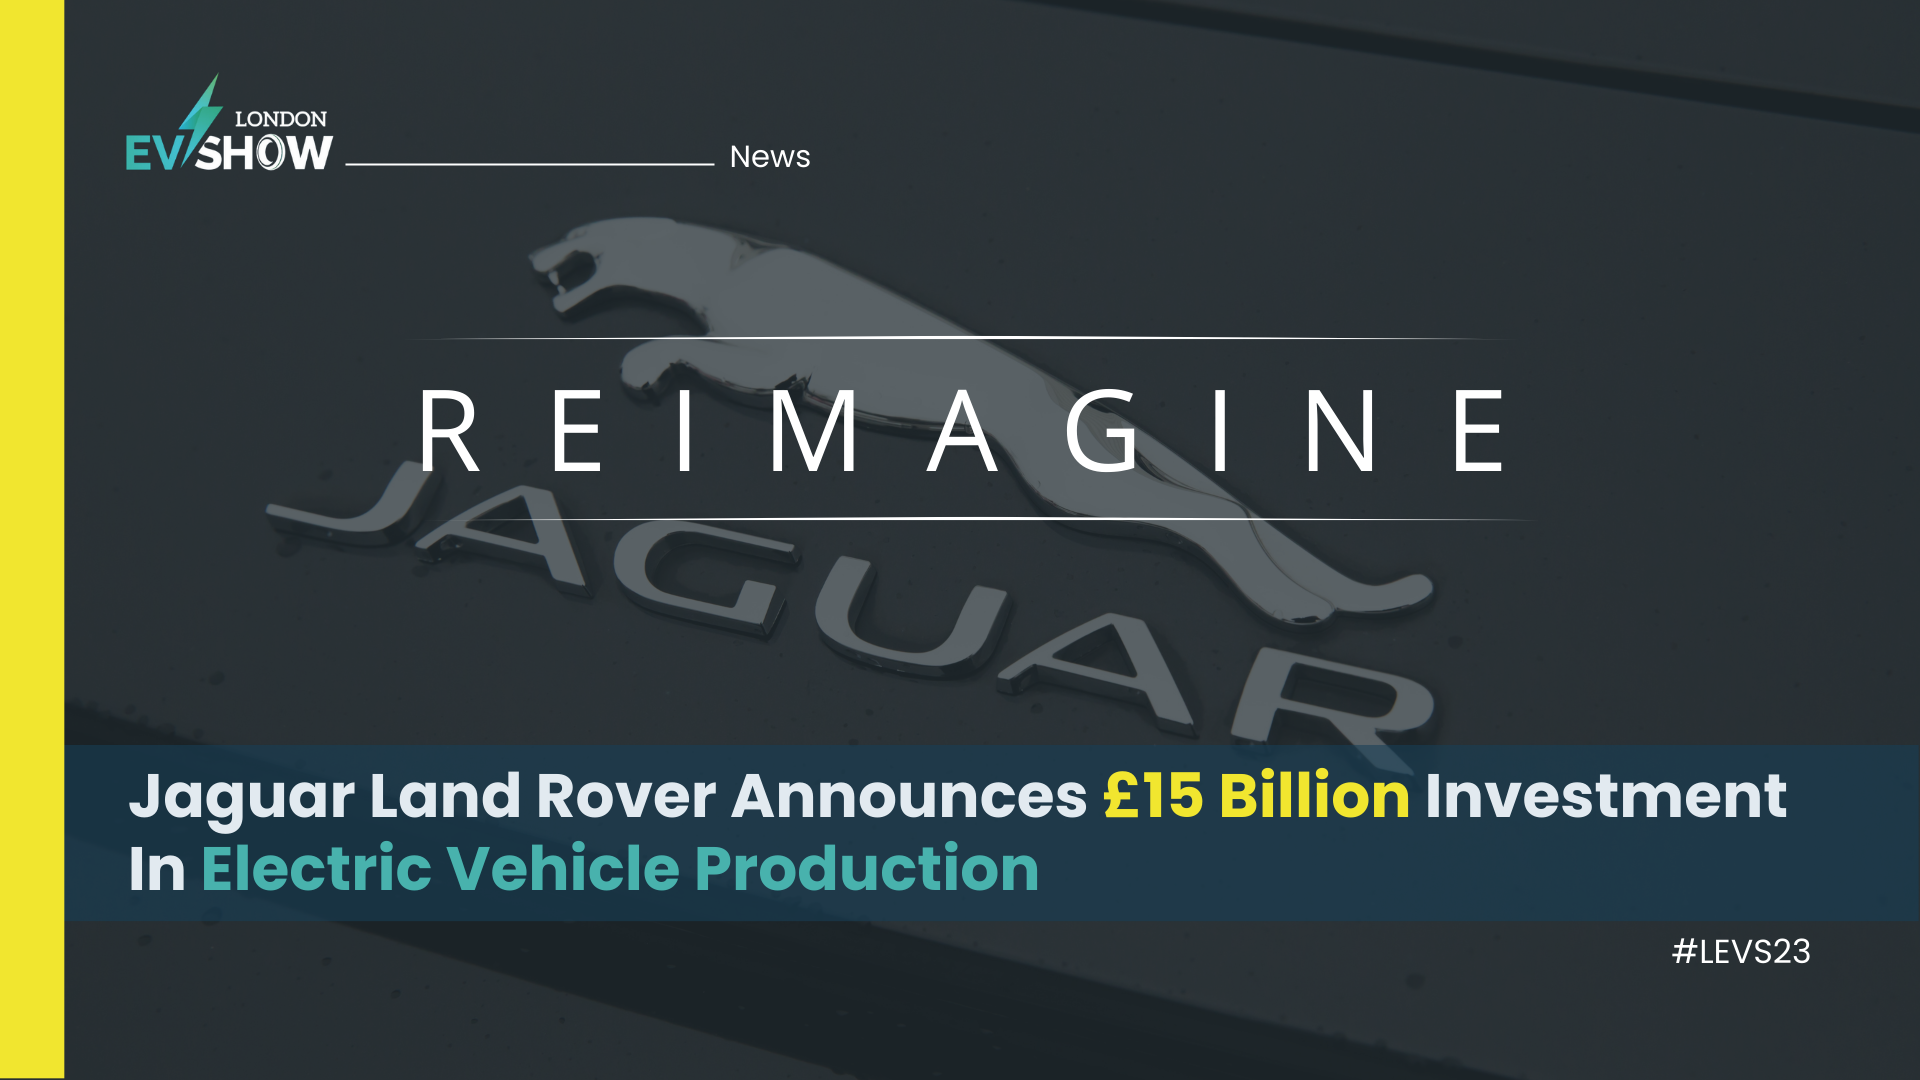 Jaguar Land Rover Announces £15 Billion Investment In Electric Vehicle Production